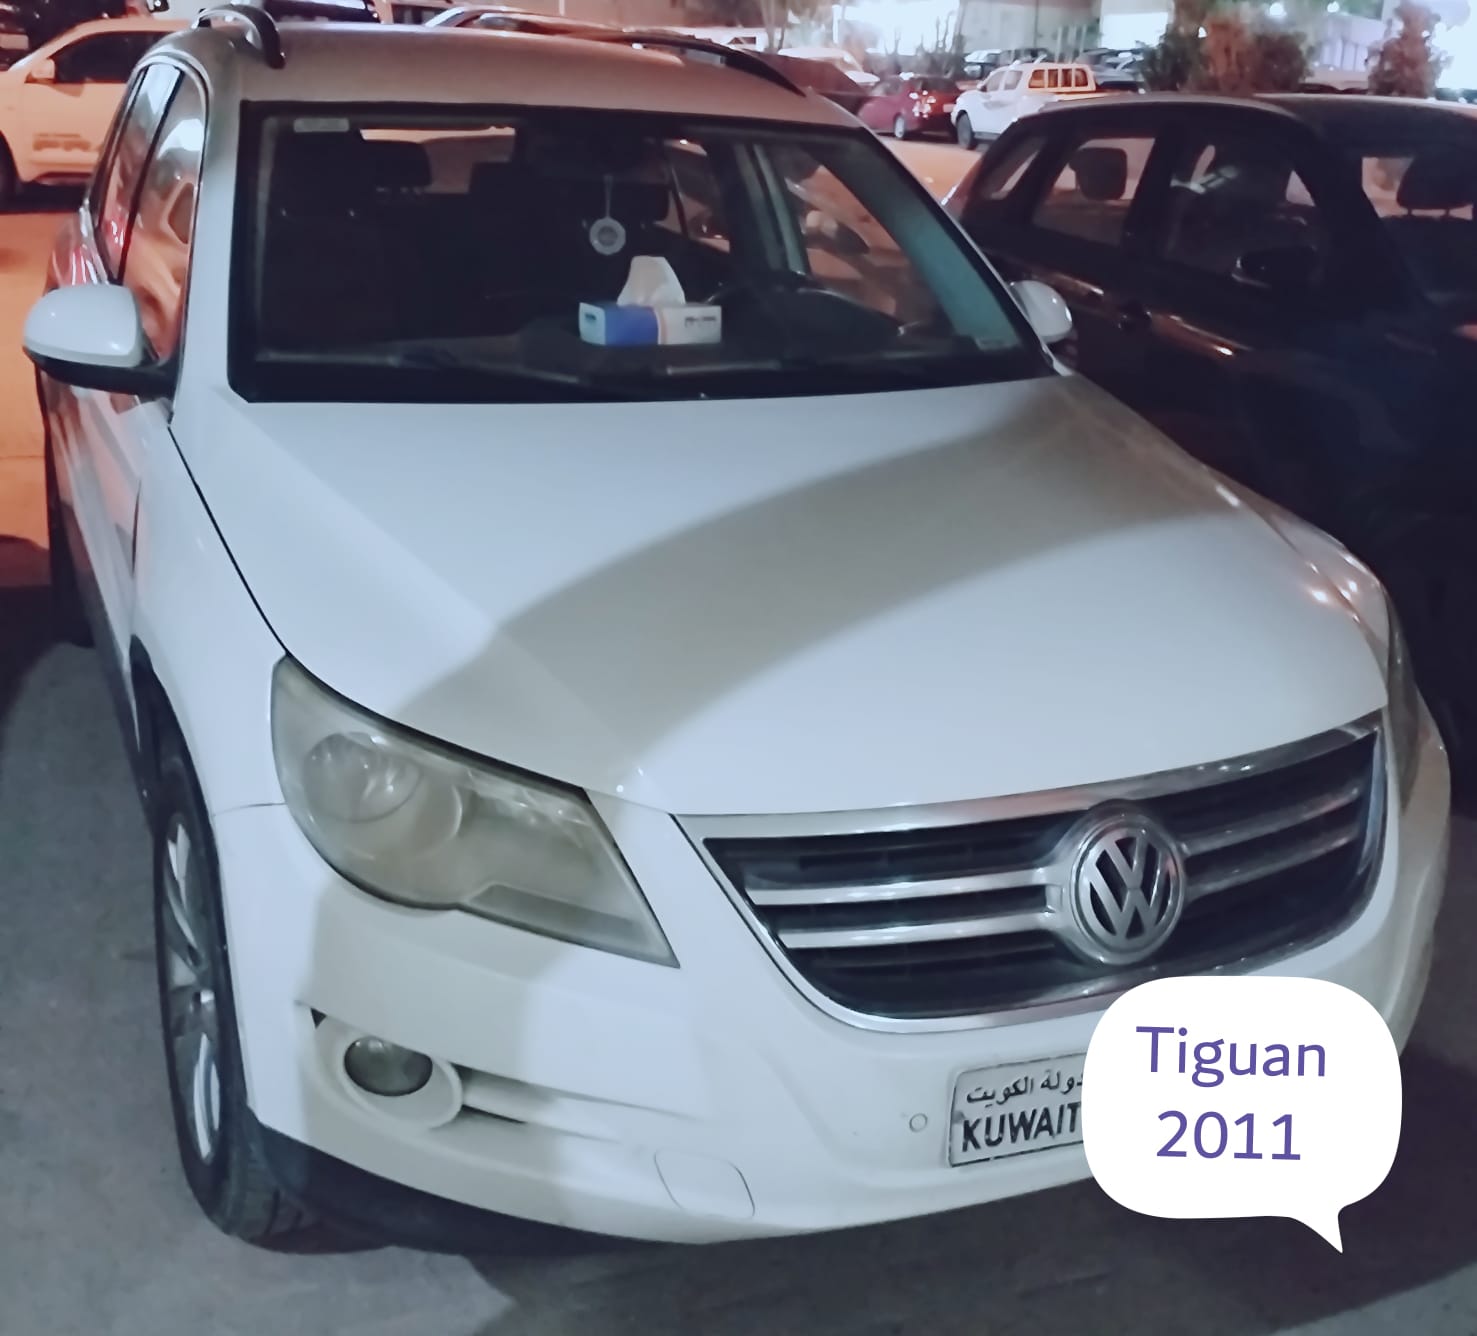 Volkswagen Tiguan (White) 2011 Model Family Used Car For Urgent Sale